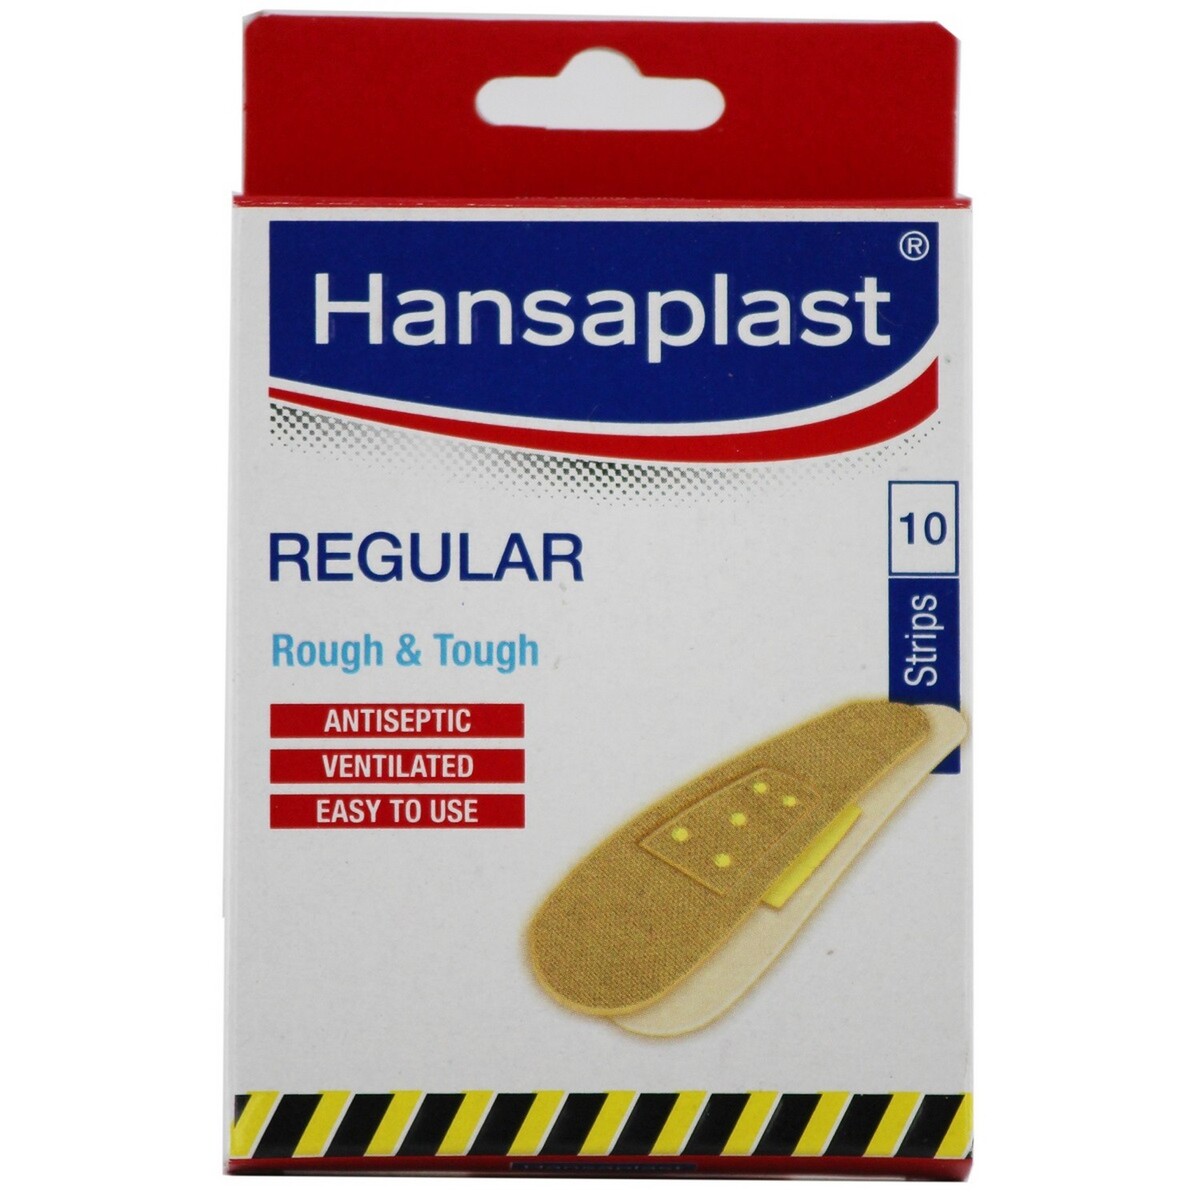 Hansaplast Band-Aid Regular Rough & Tough 10's